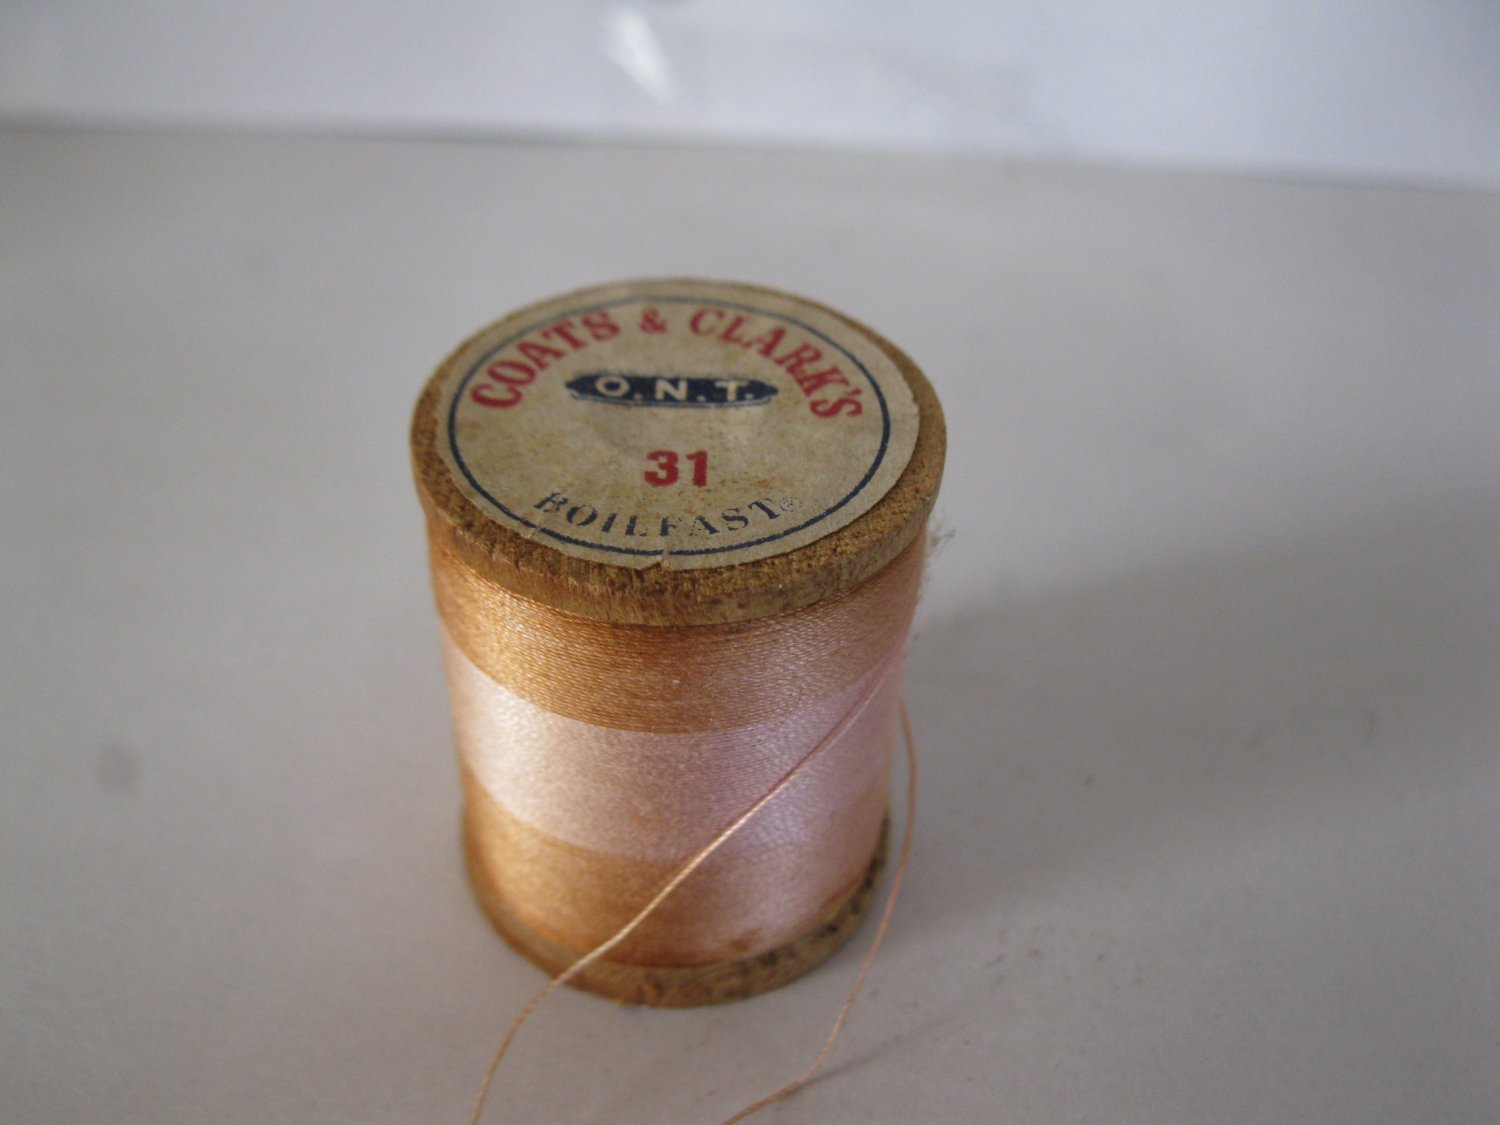 #25 old wood Spool w/ Thread: Coat's & Clark's Boilfast #31